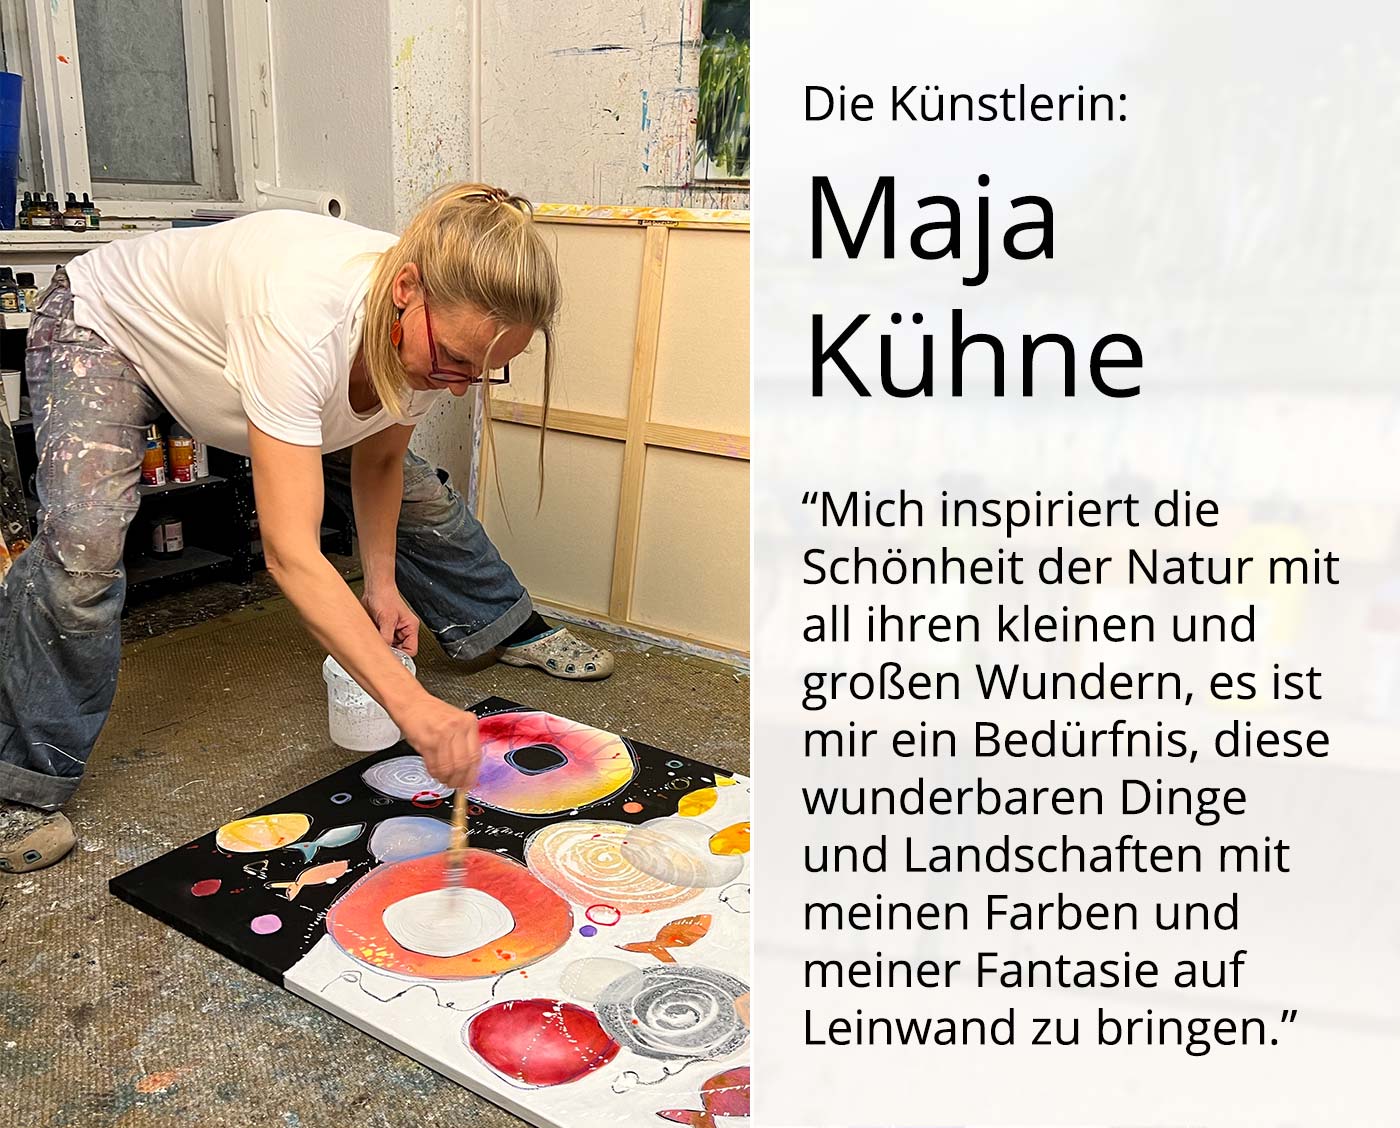 M. Kühne: "Im Frühlingslicht", Edition, signierter Kunstdruck